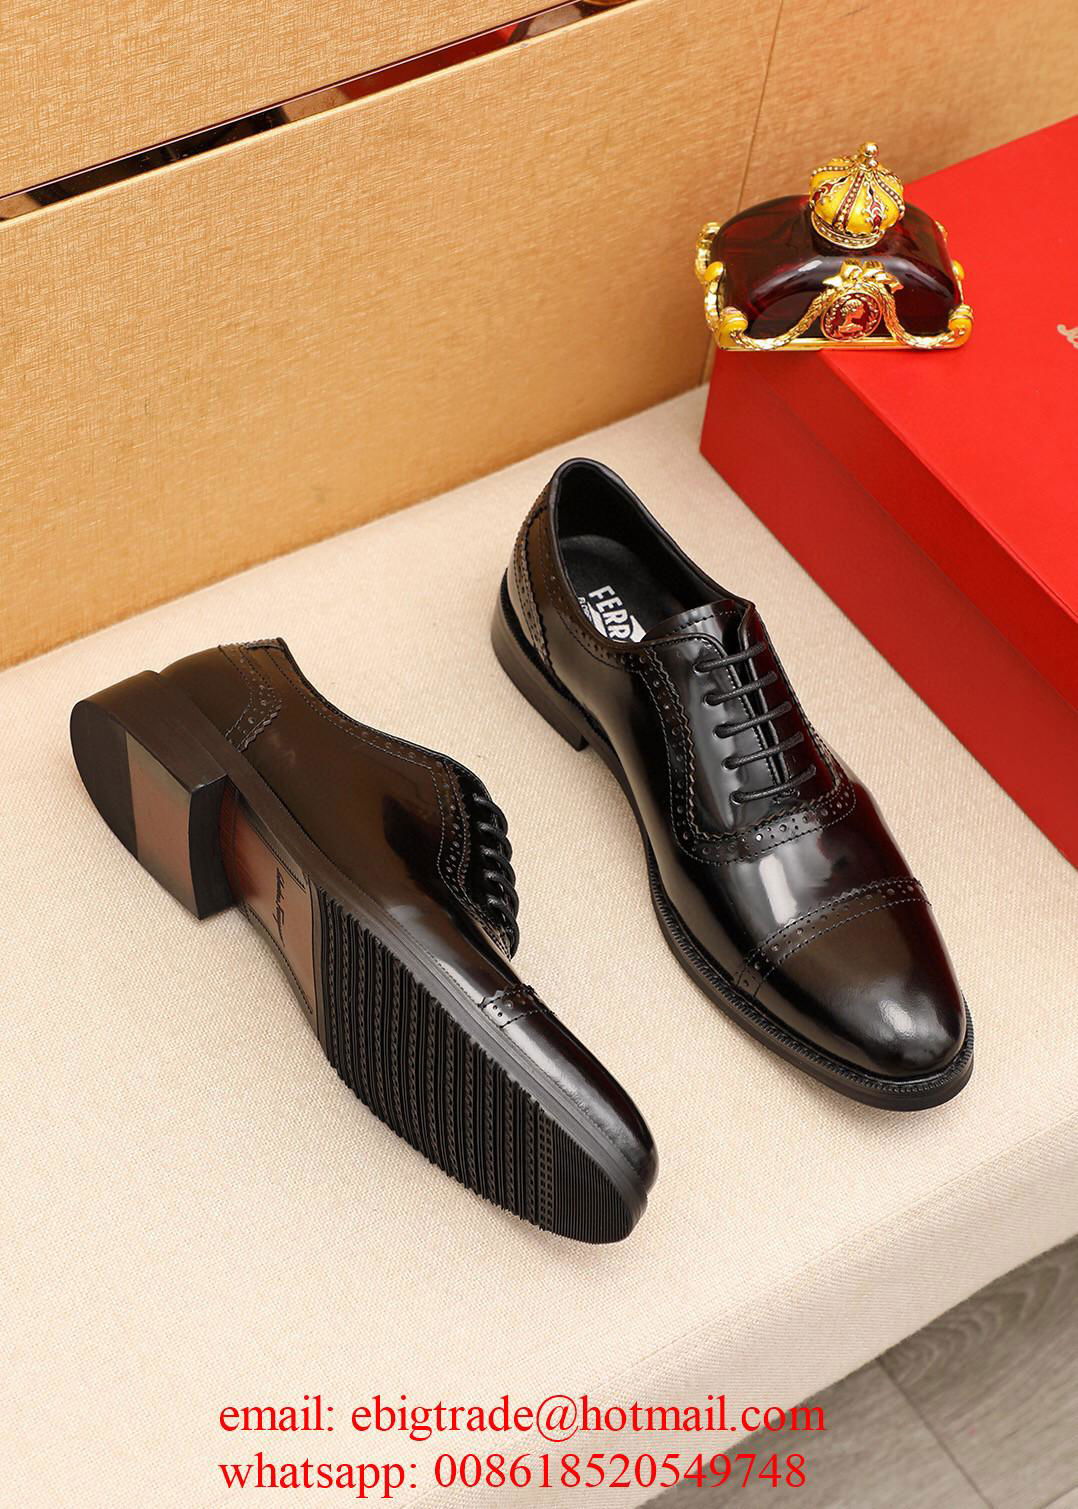 Wholesaler Salvatore           Dress Shoes Men           Leather shoes Price 3